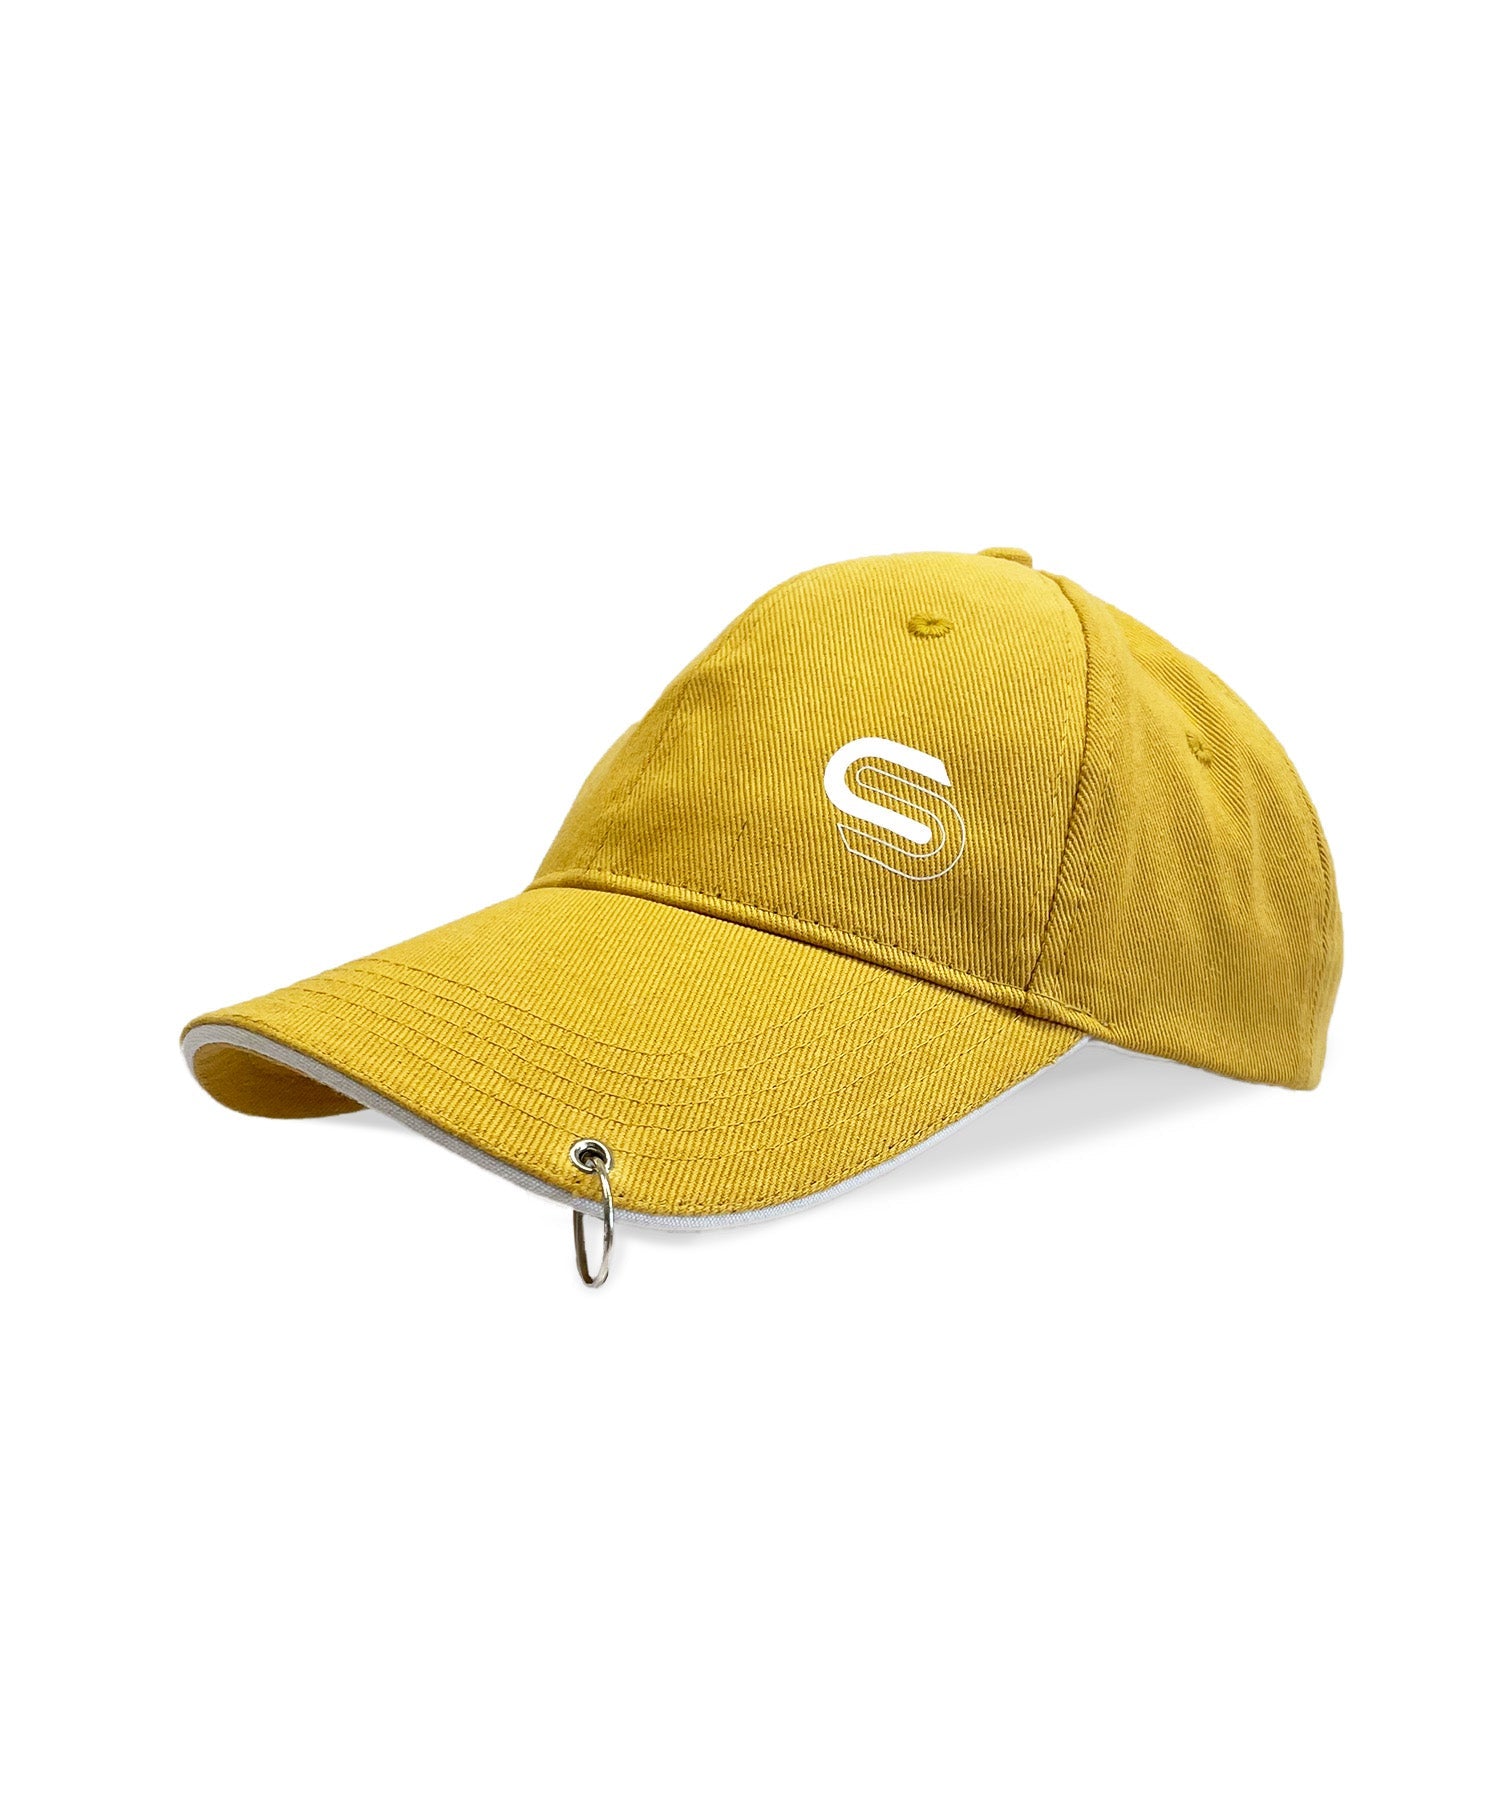 Fearless Cap - Hats